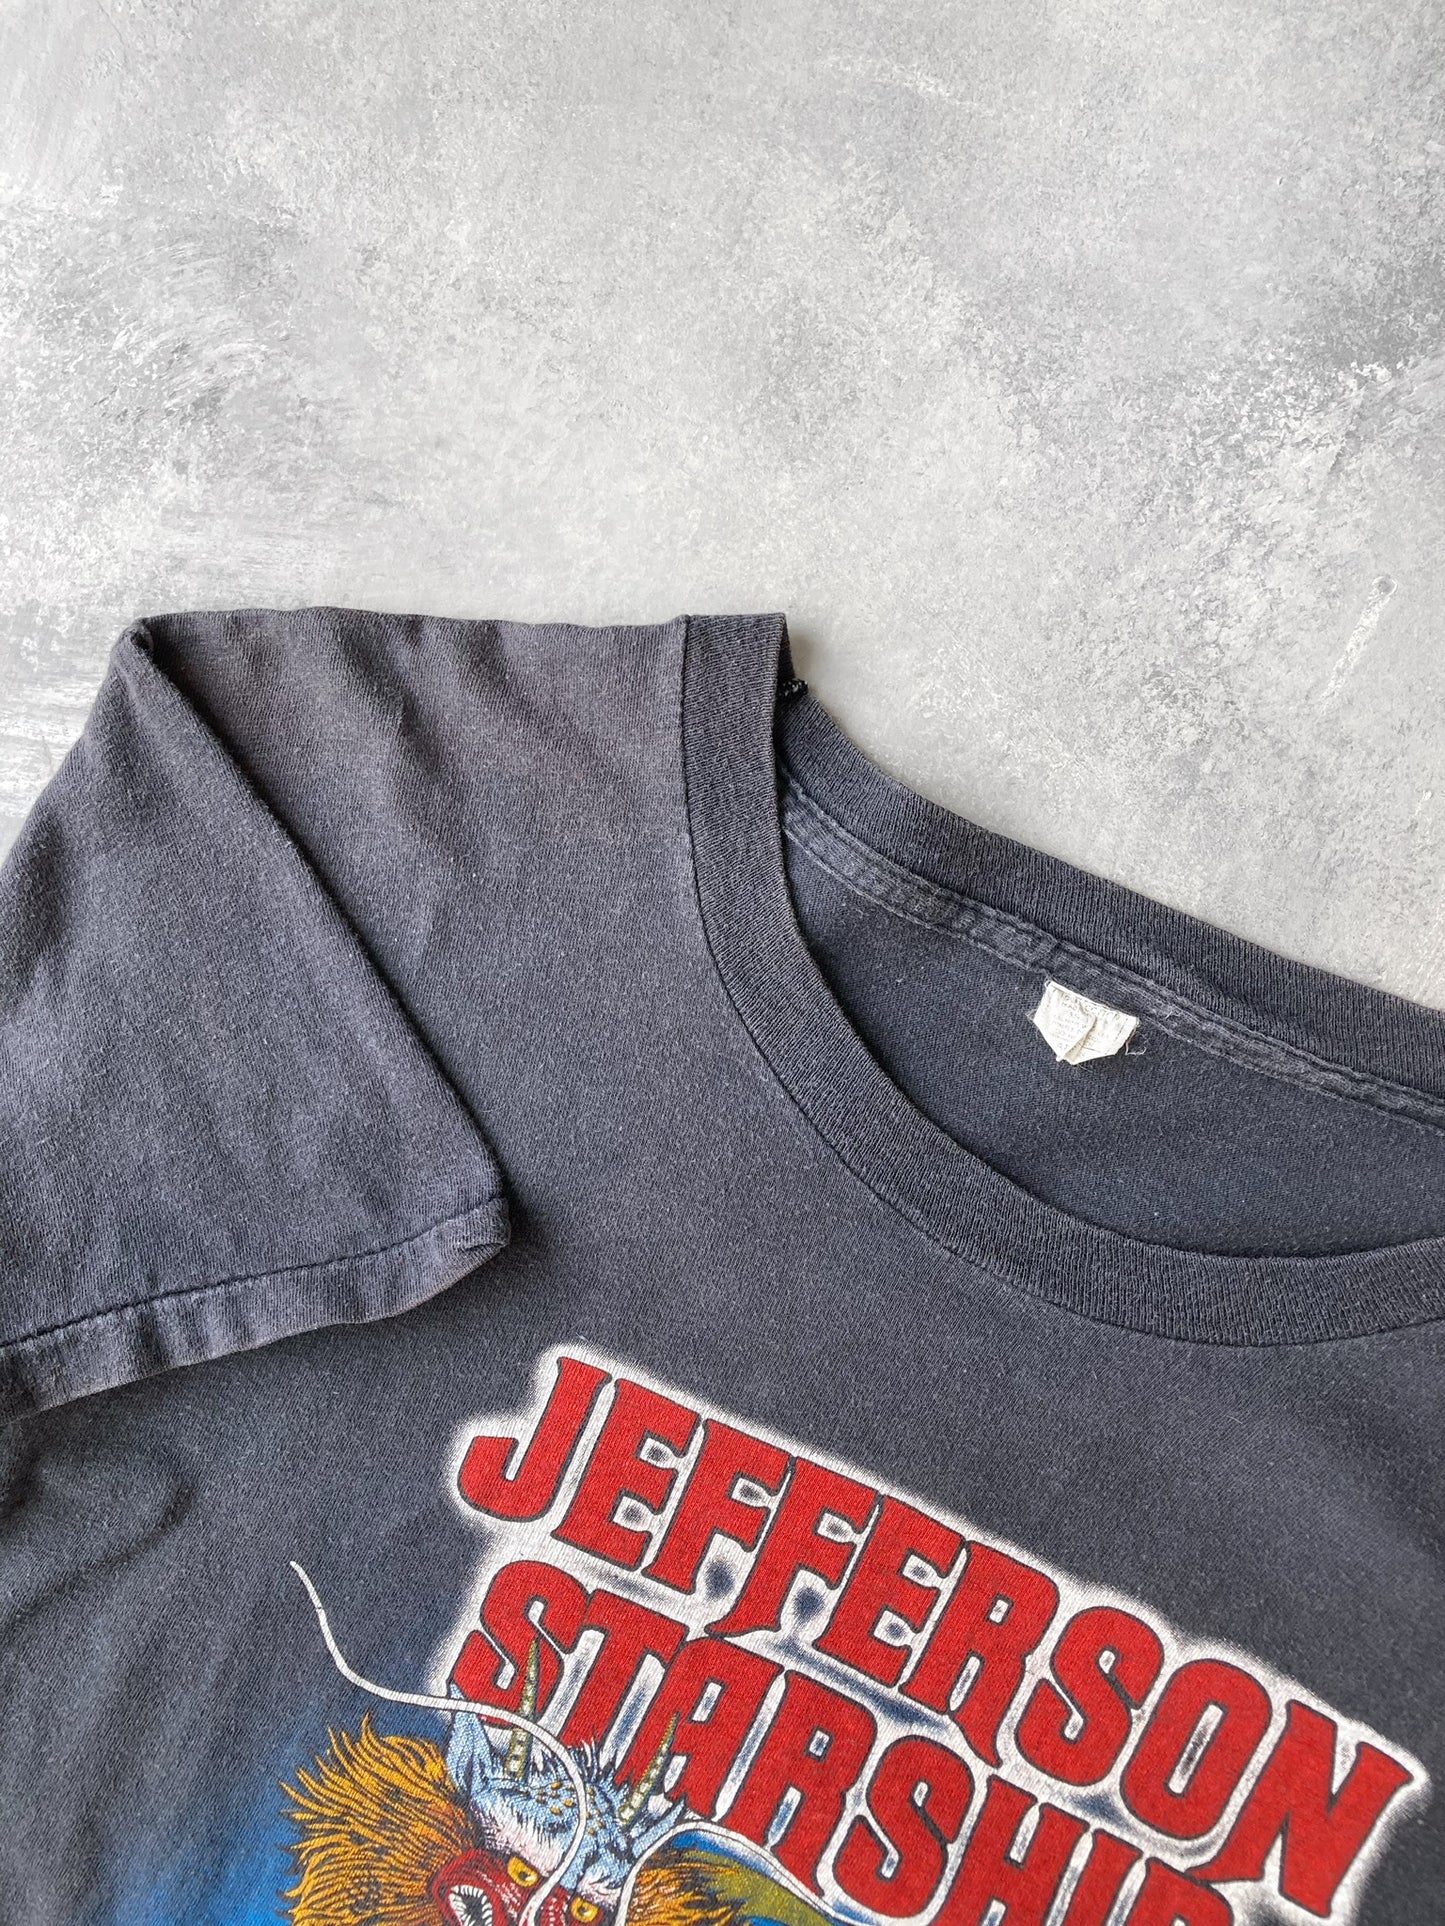 Jefferson Starship T-Shirt '81 - Large